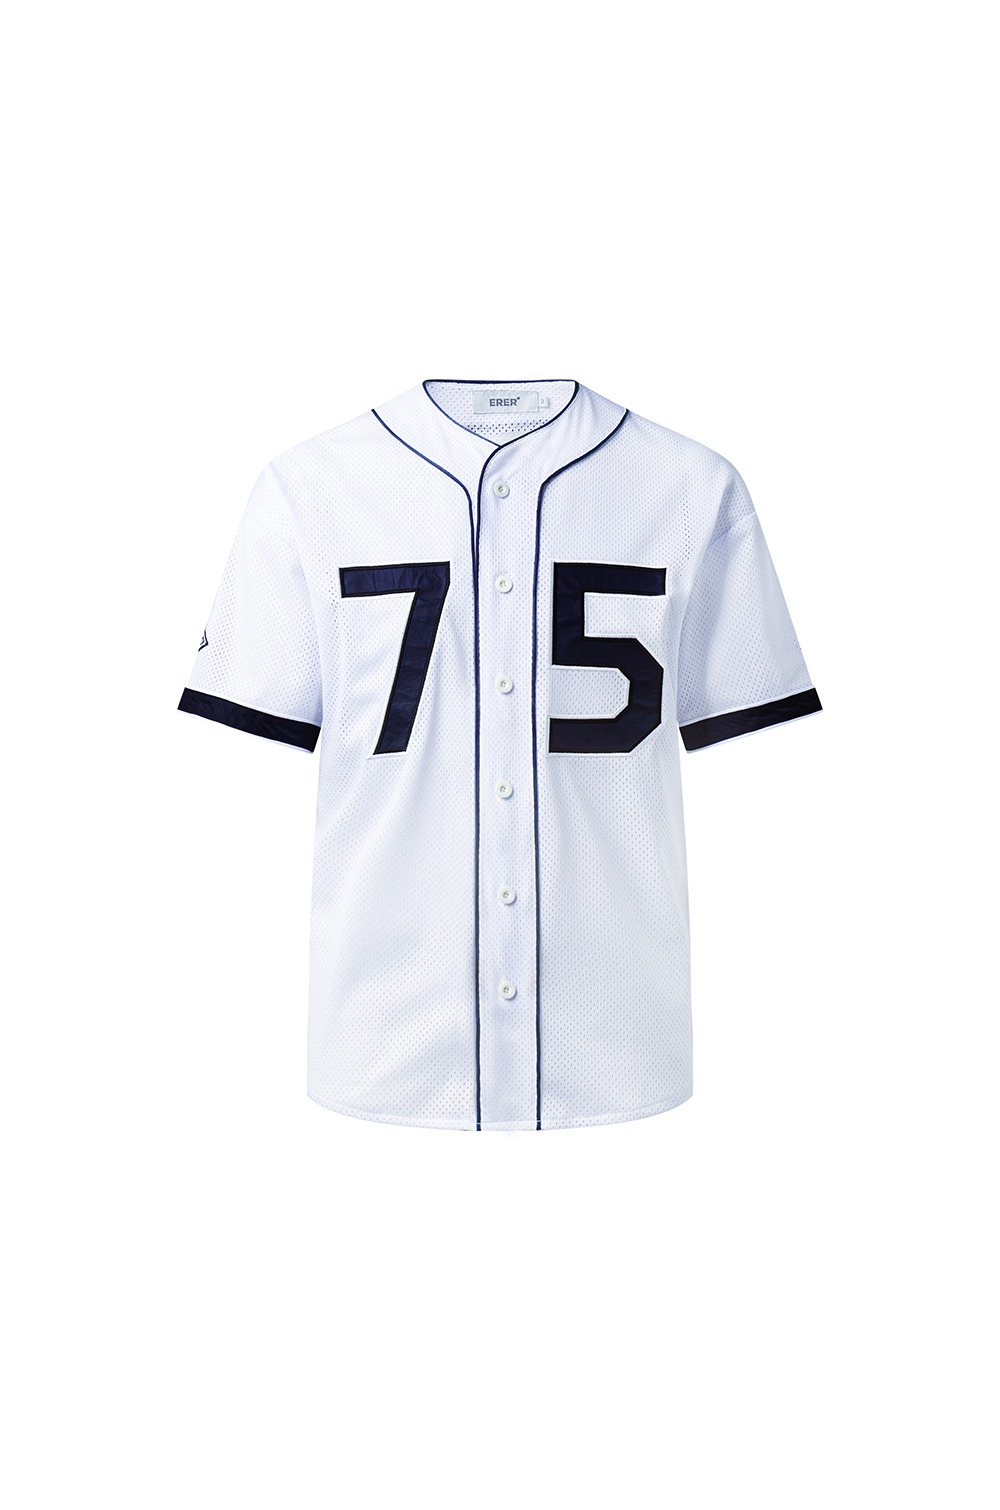 [UN] 75 baseball jersey - White